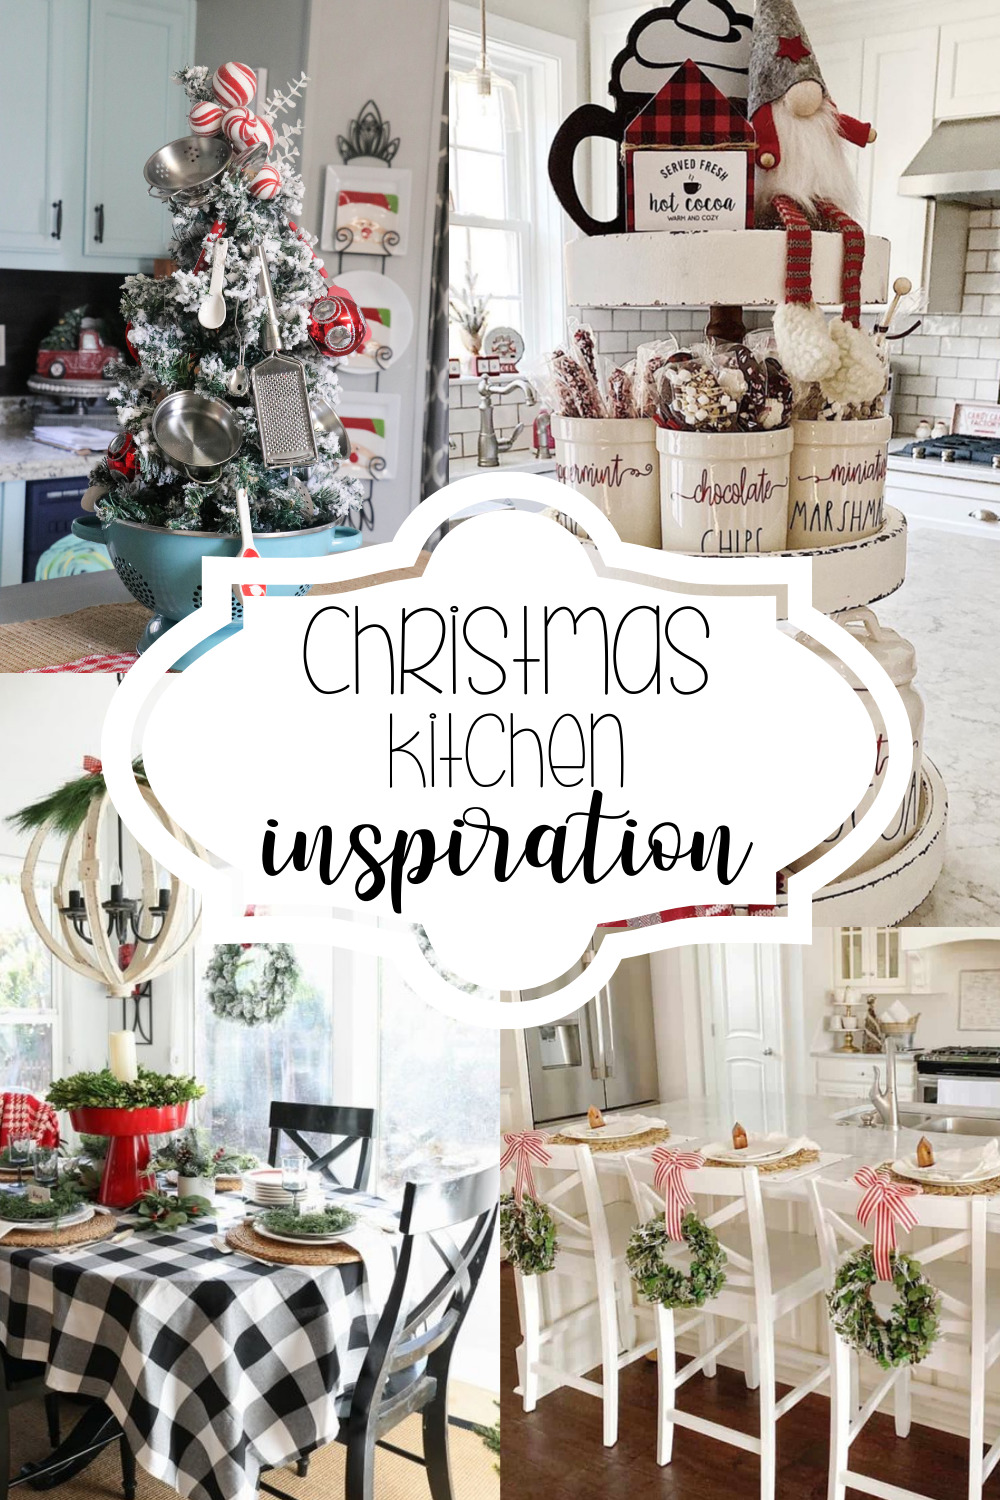 https://www.re-fabbed.com/wp-content/uploads/2020/11/christmas-kitchen-inspiration.jpg